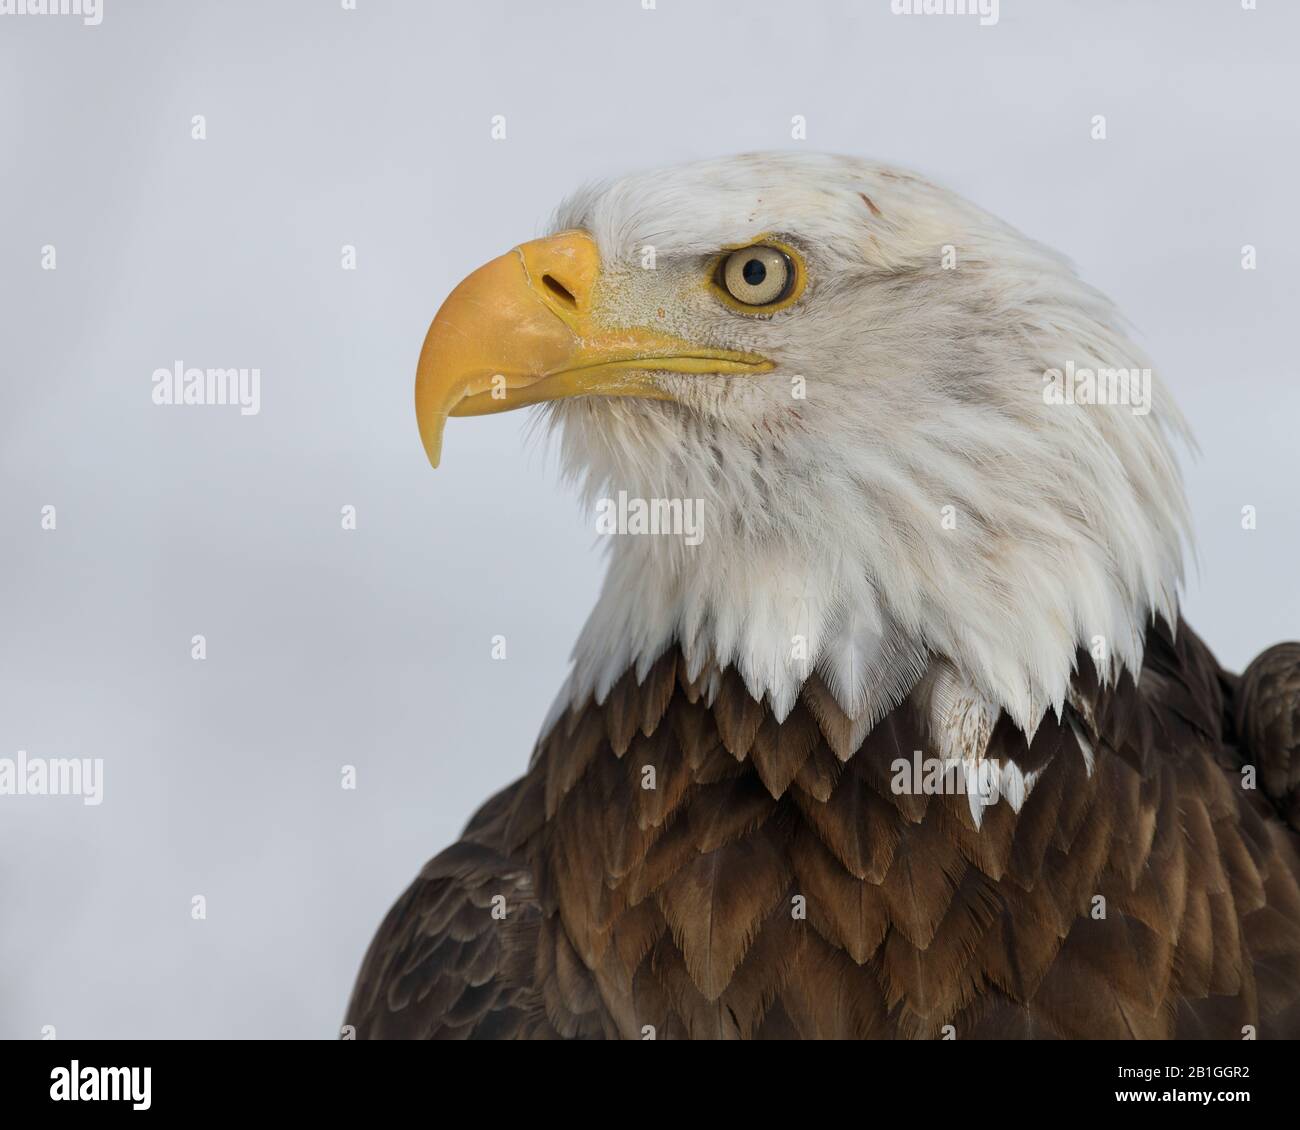 American bald eagle closeup portrait Stock Photo